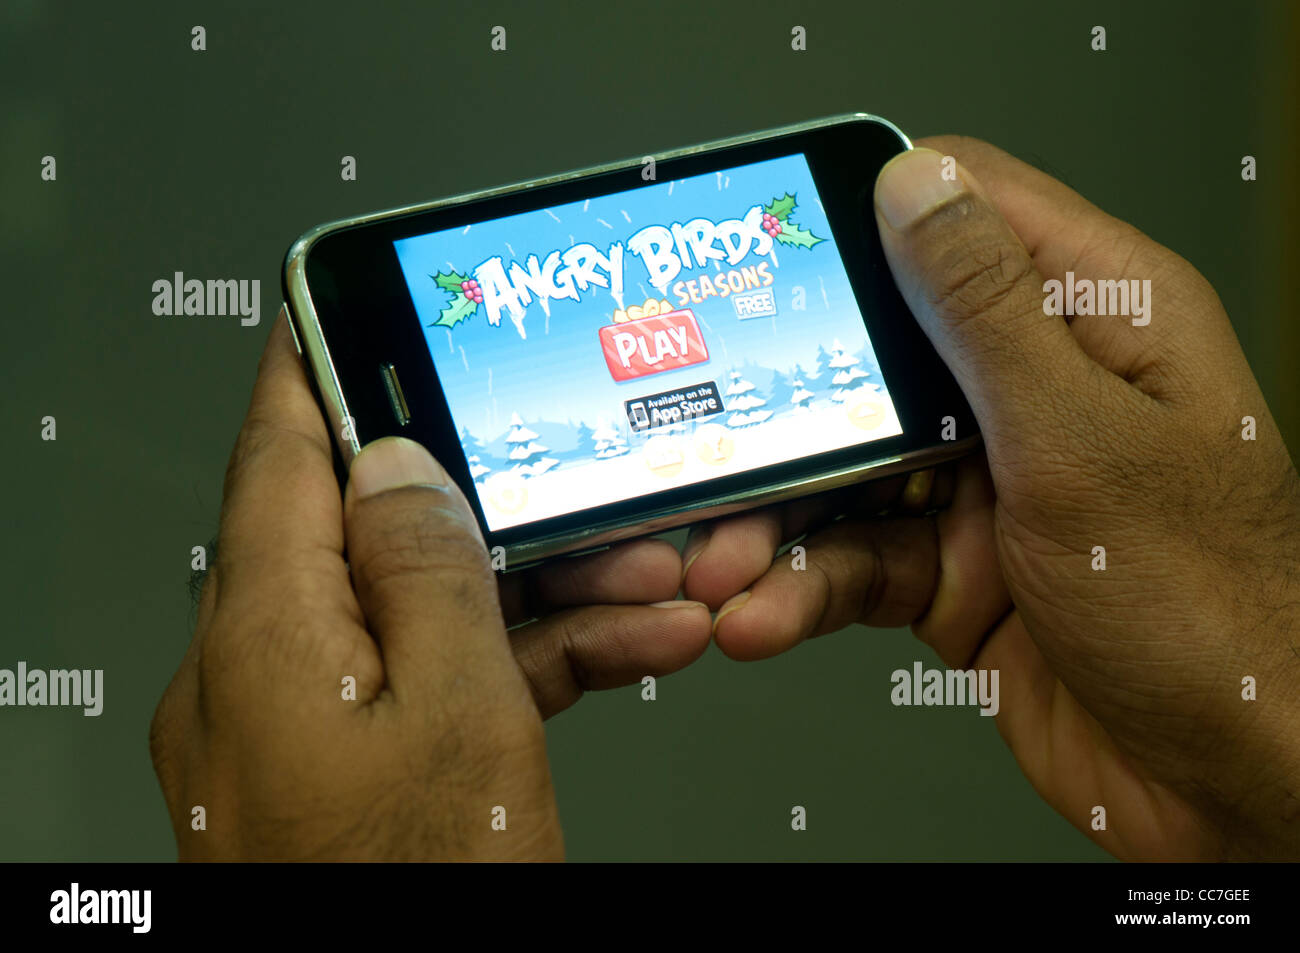 Angry Birds Seasons Spiel auf Iphone Handy Stockfoto